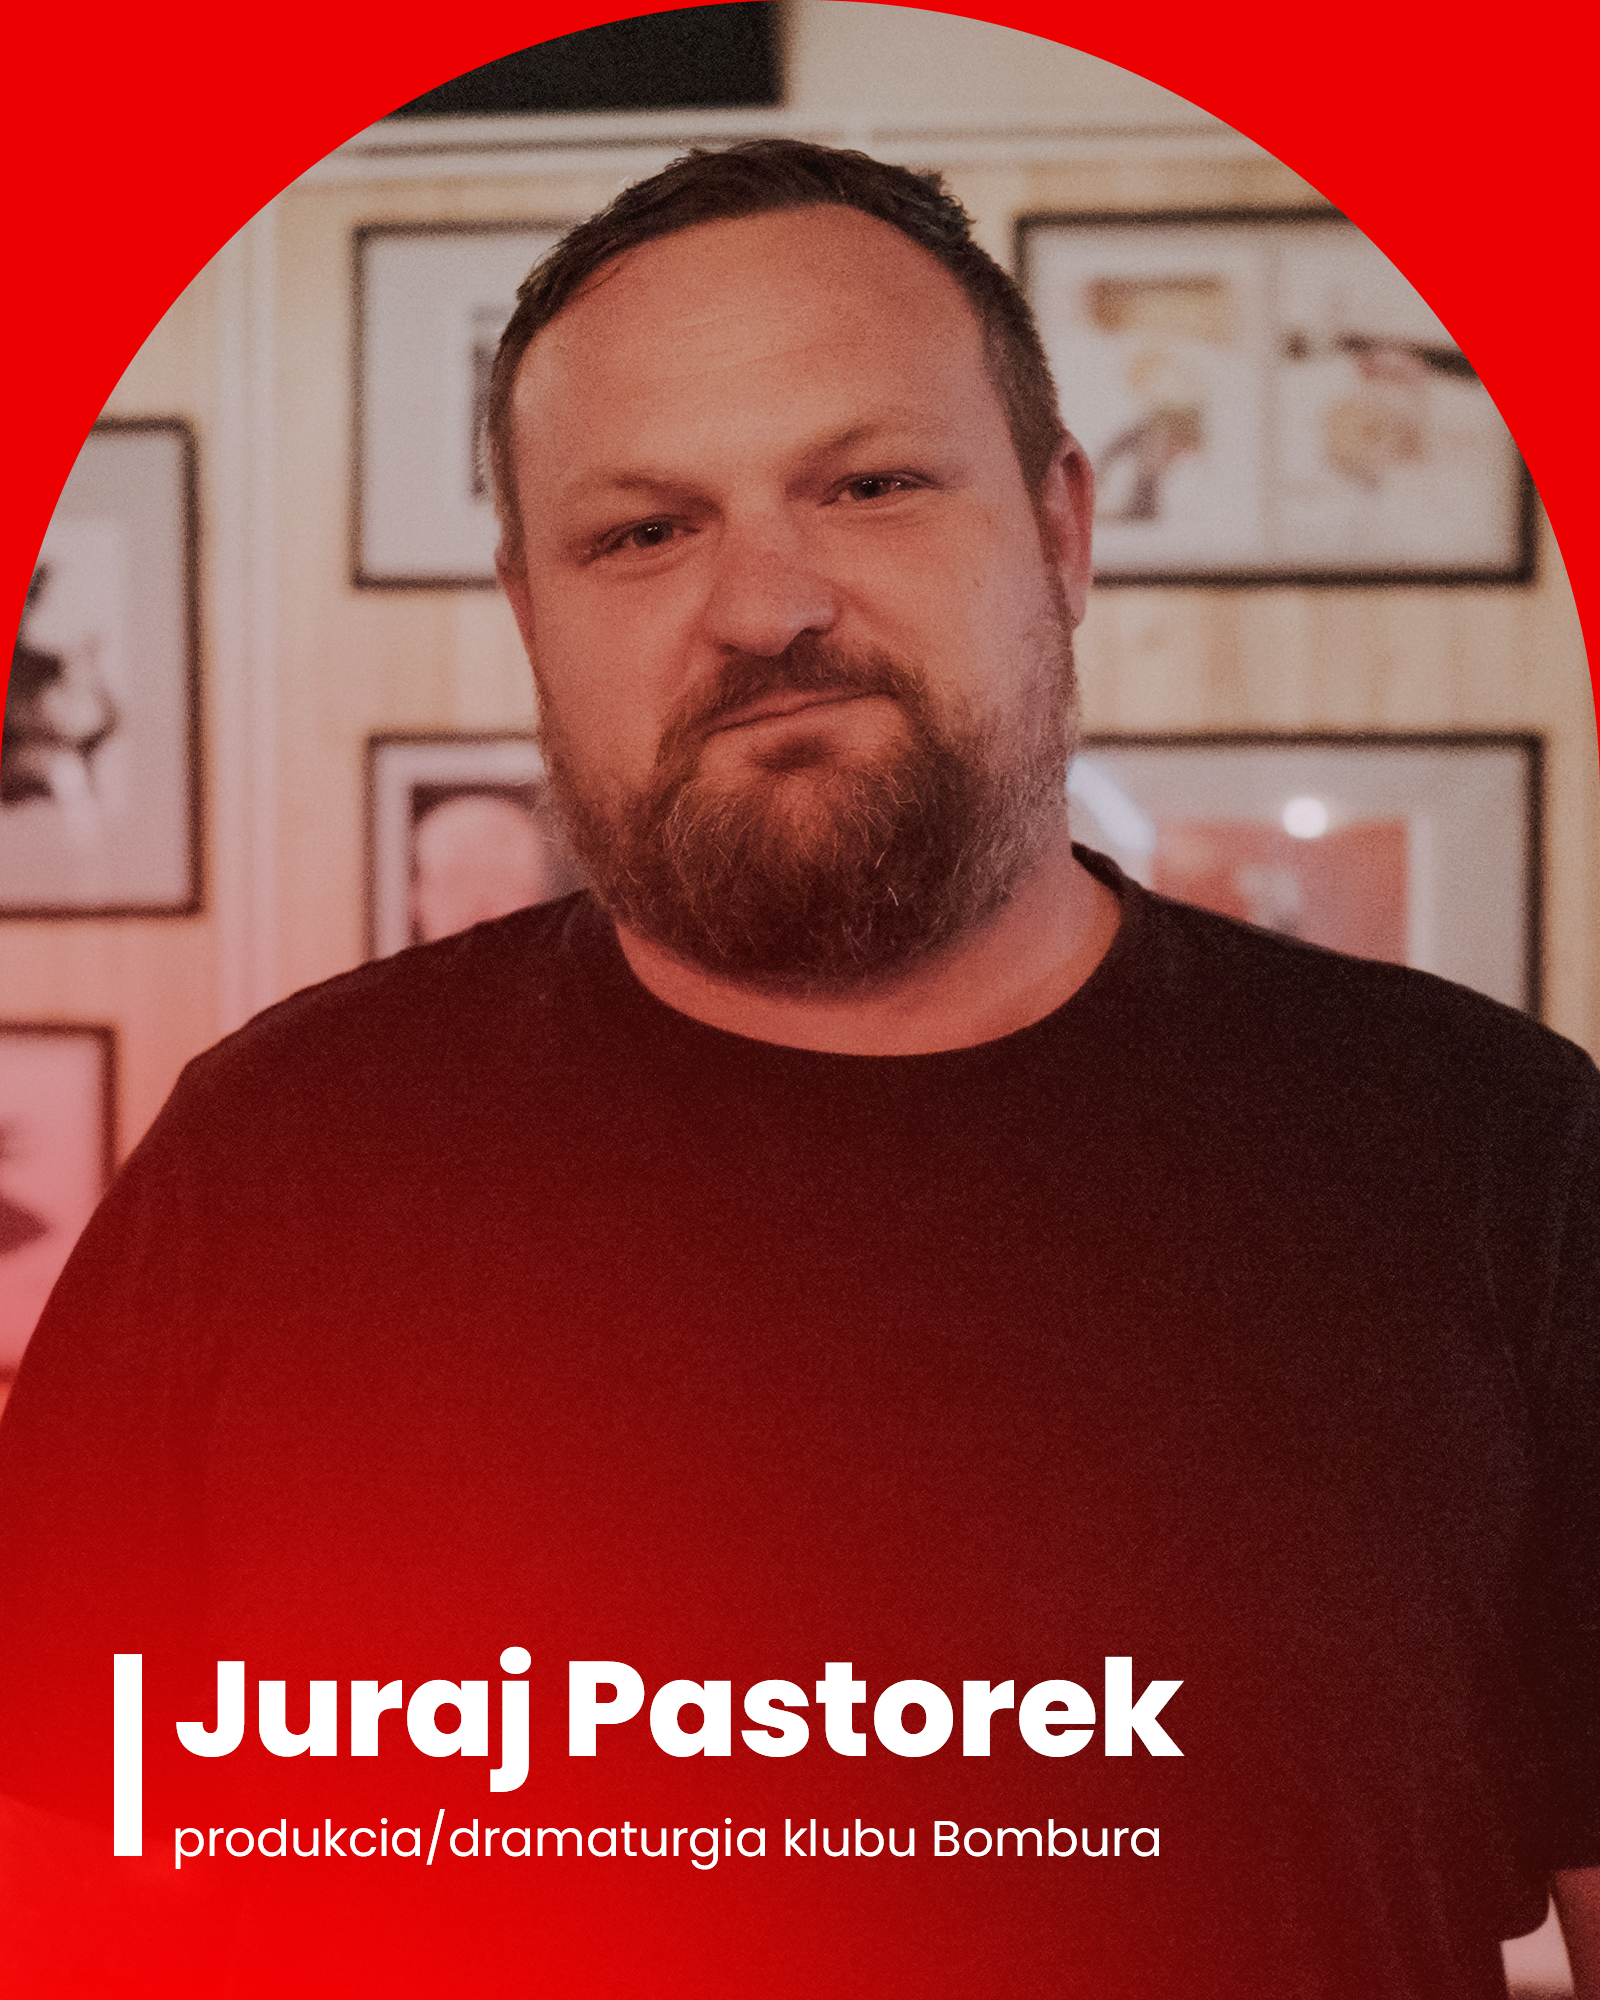 Juraj Pastorek - produkcia/dramaturgia klubu Bombura